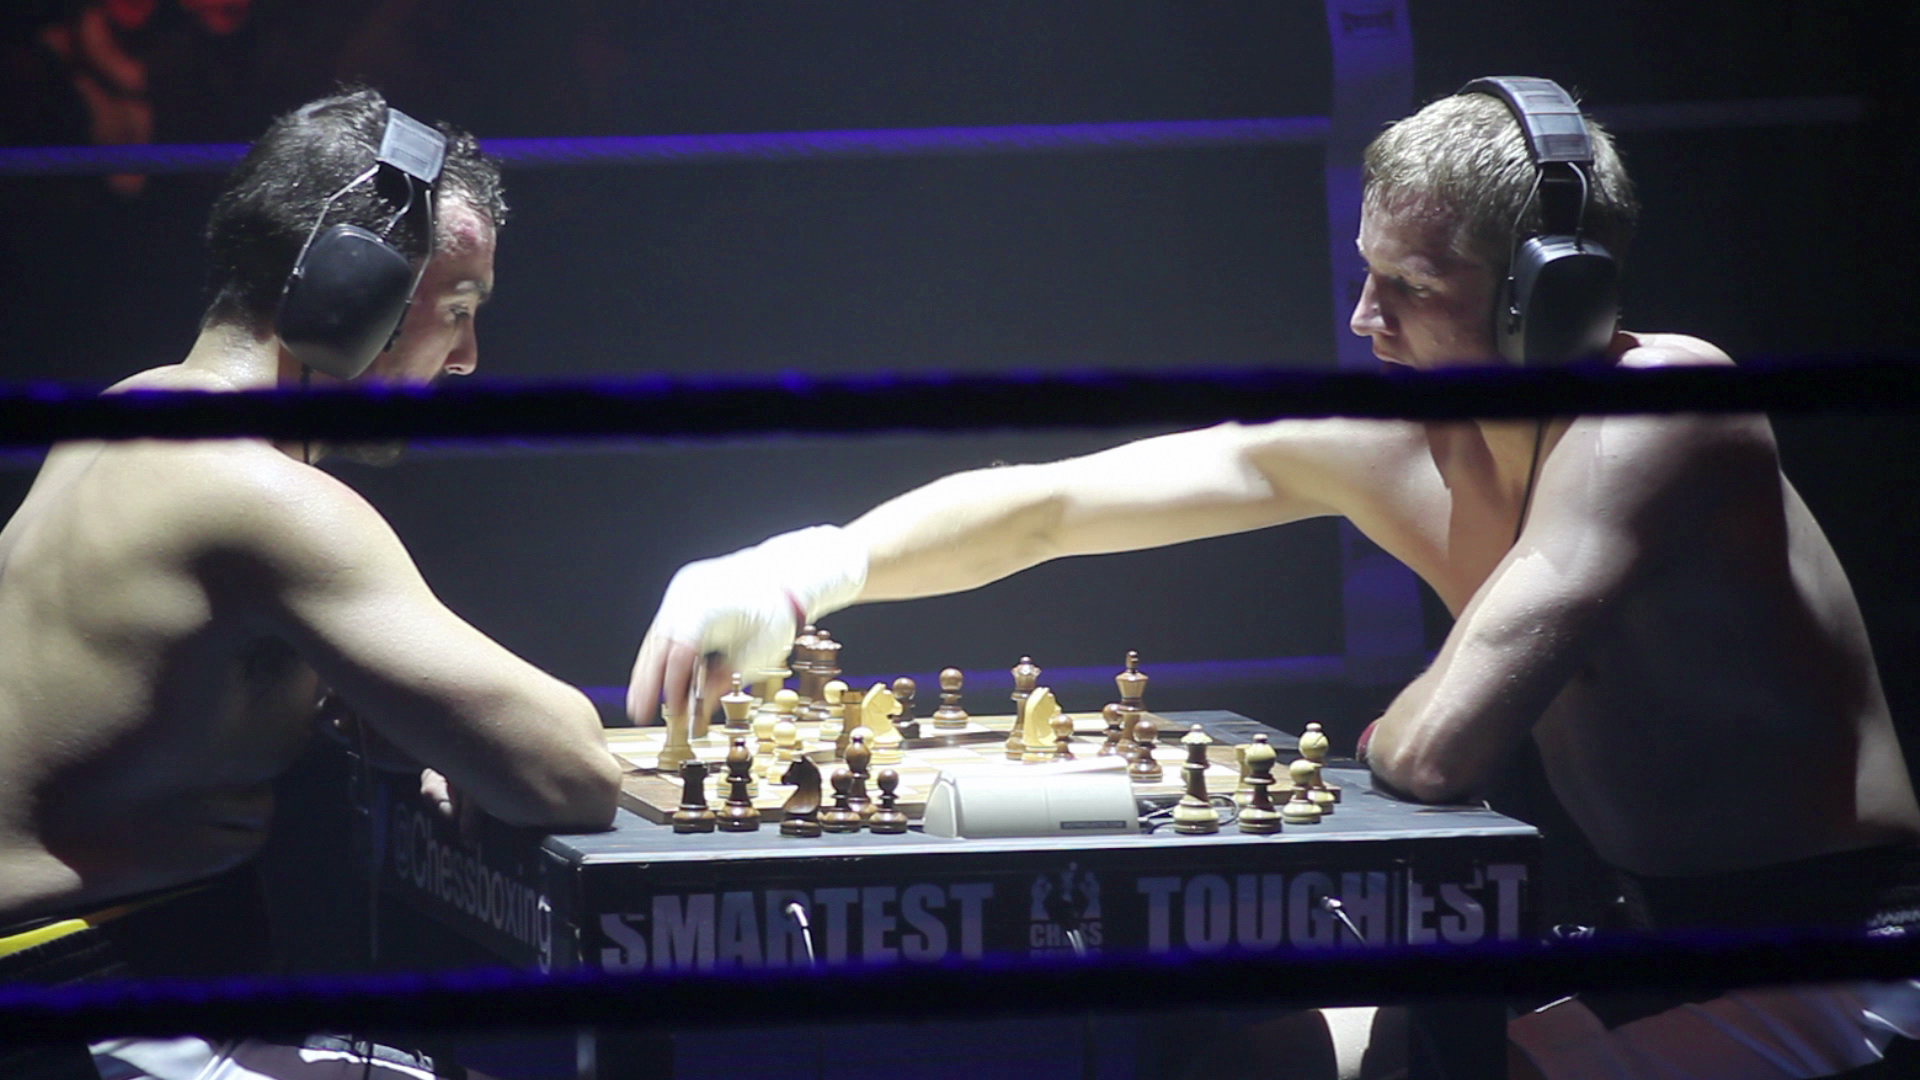 chess boxing : r/theocho